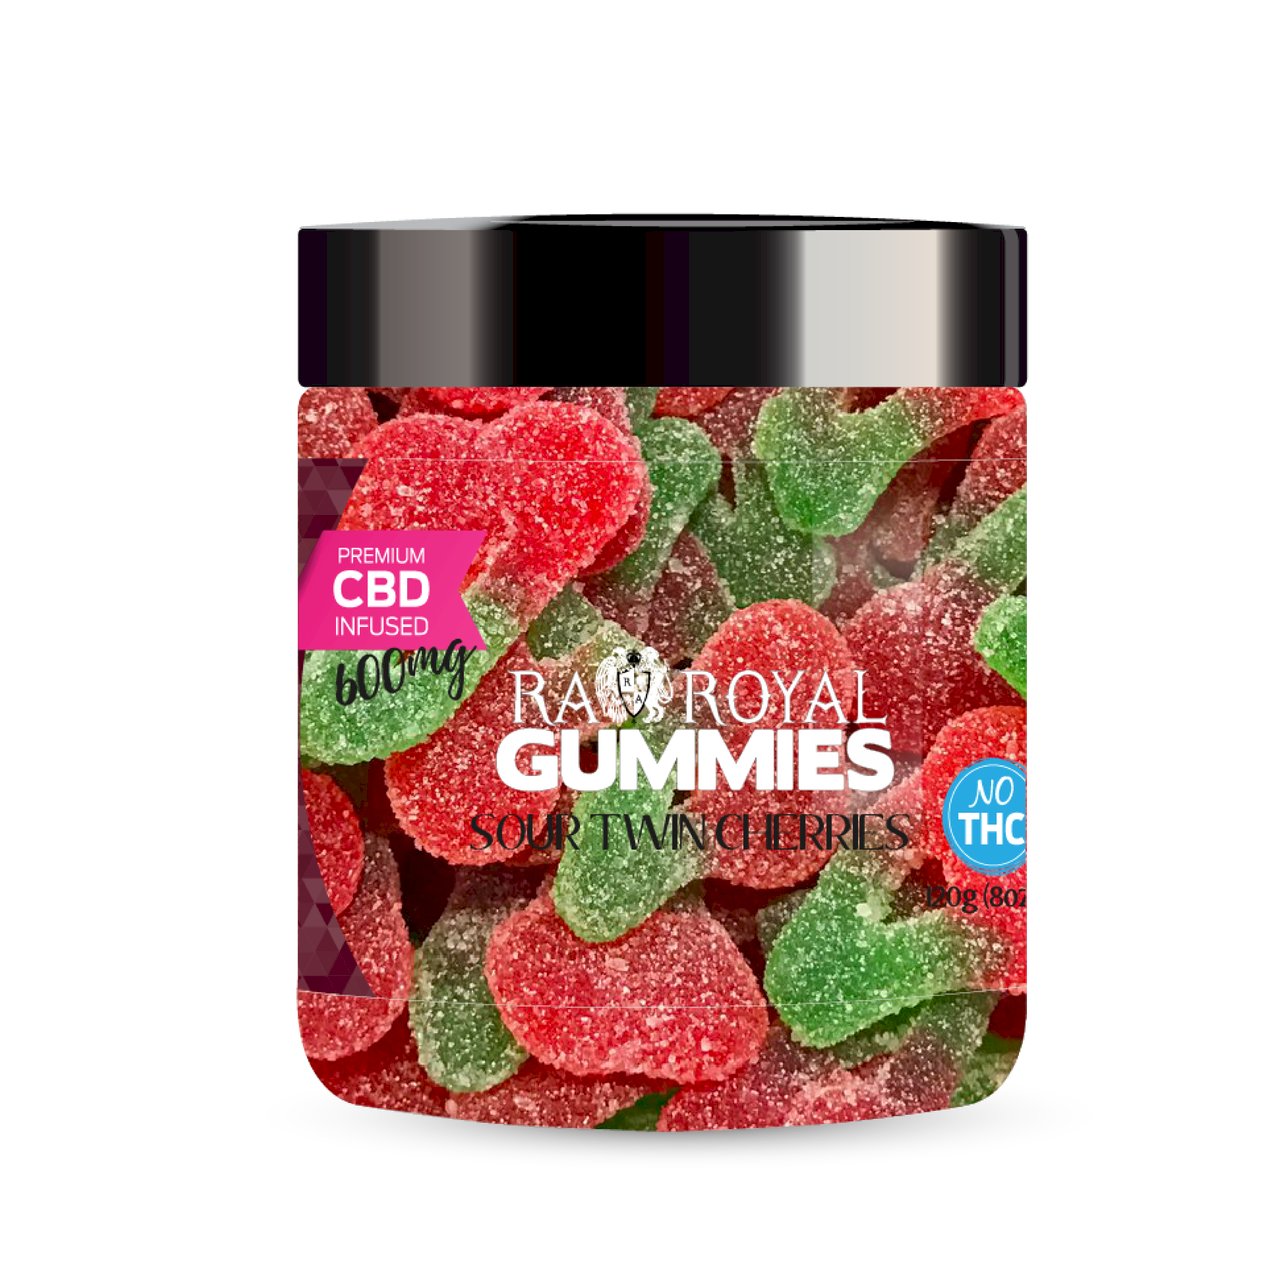 R.A. Royal Gummies \u2013 600MG CBD Infused Sour Twin Cherries - CBD Marketplace - Shop the Best CBD ...